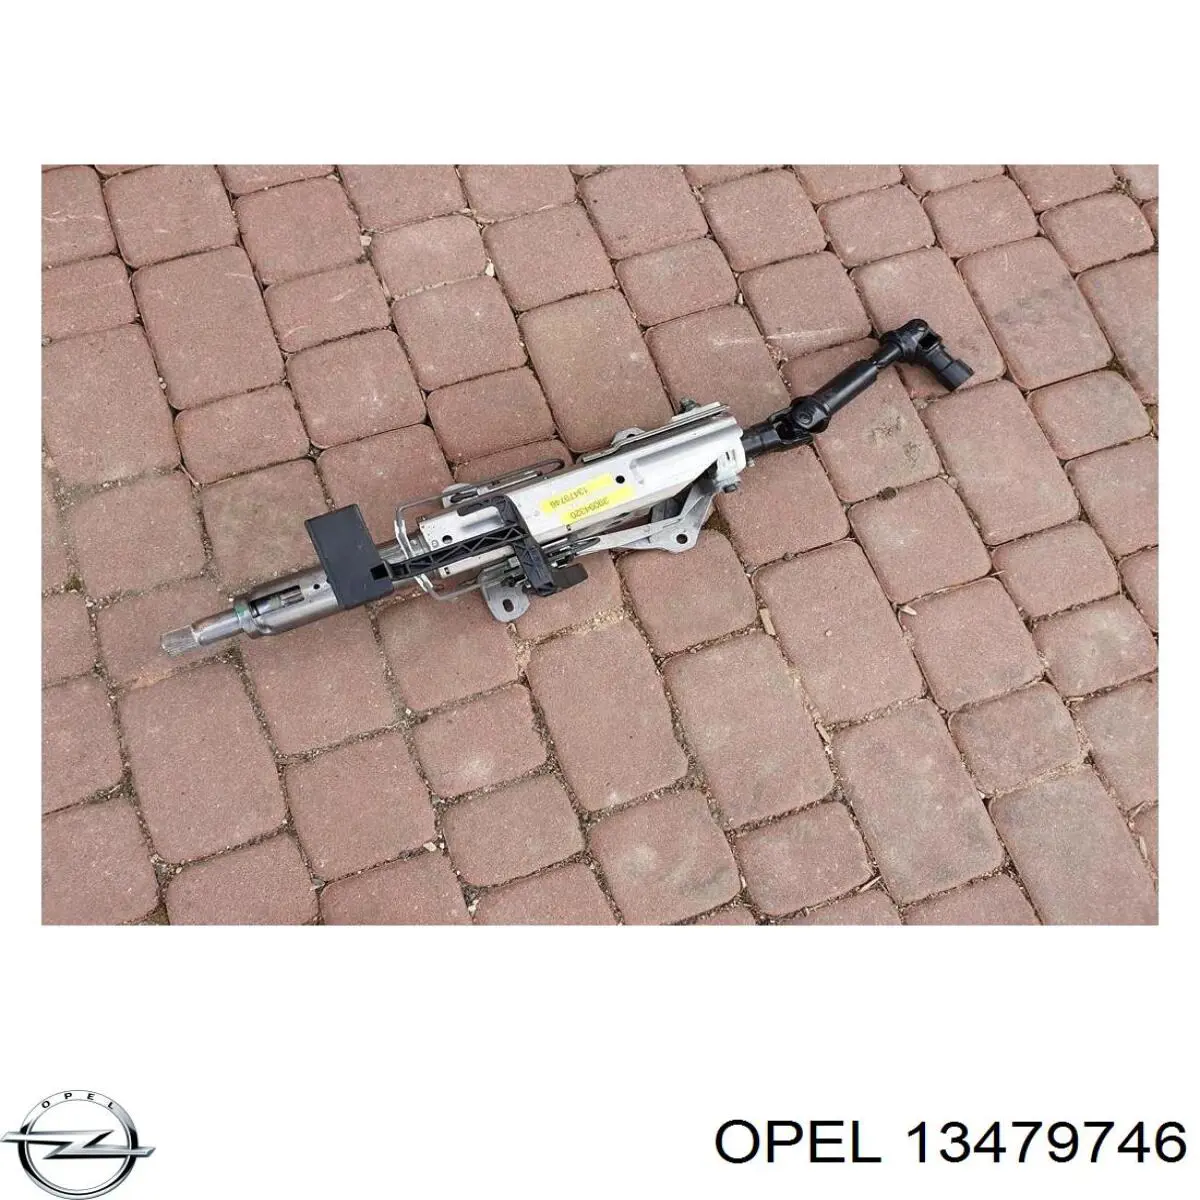 13479746 Opel вал рулевой колонки нижний